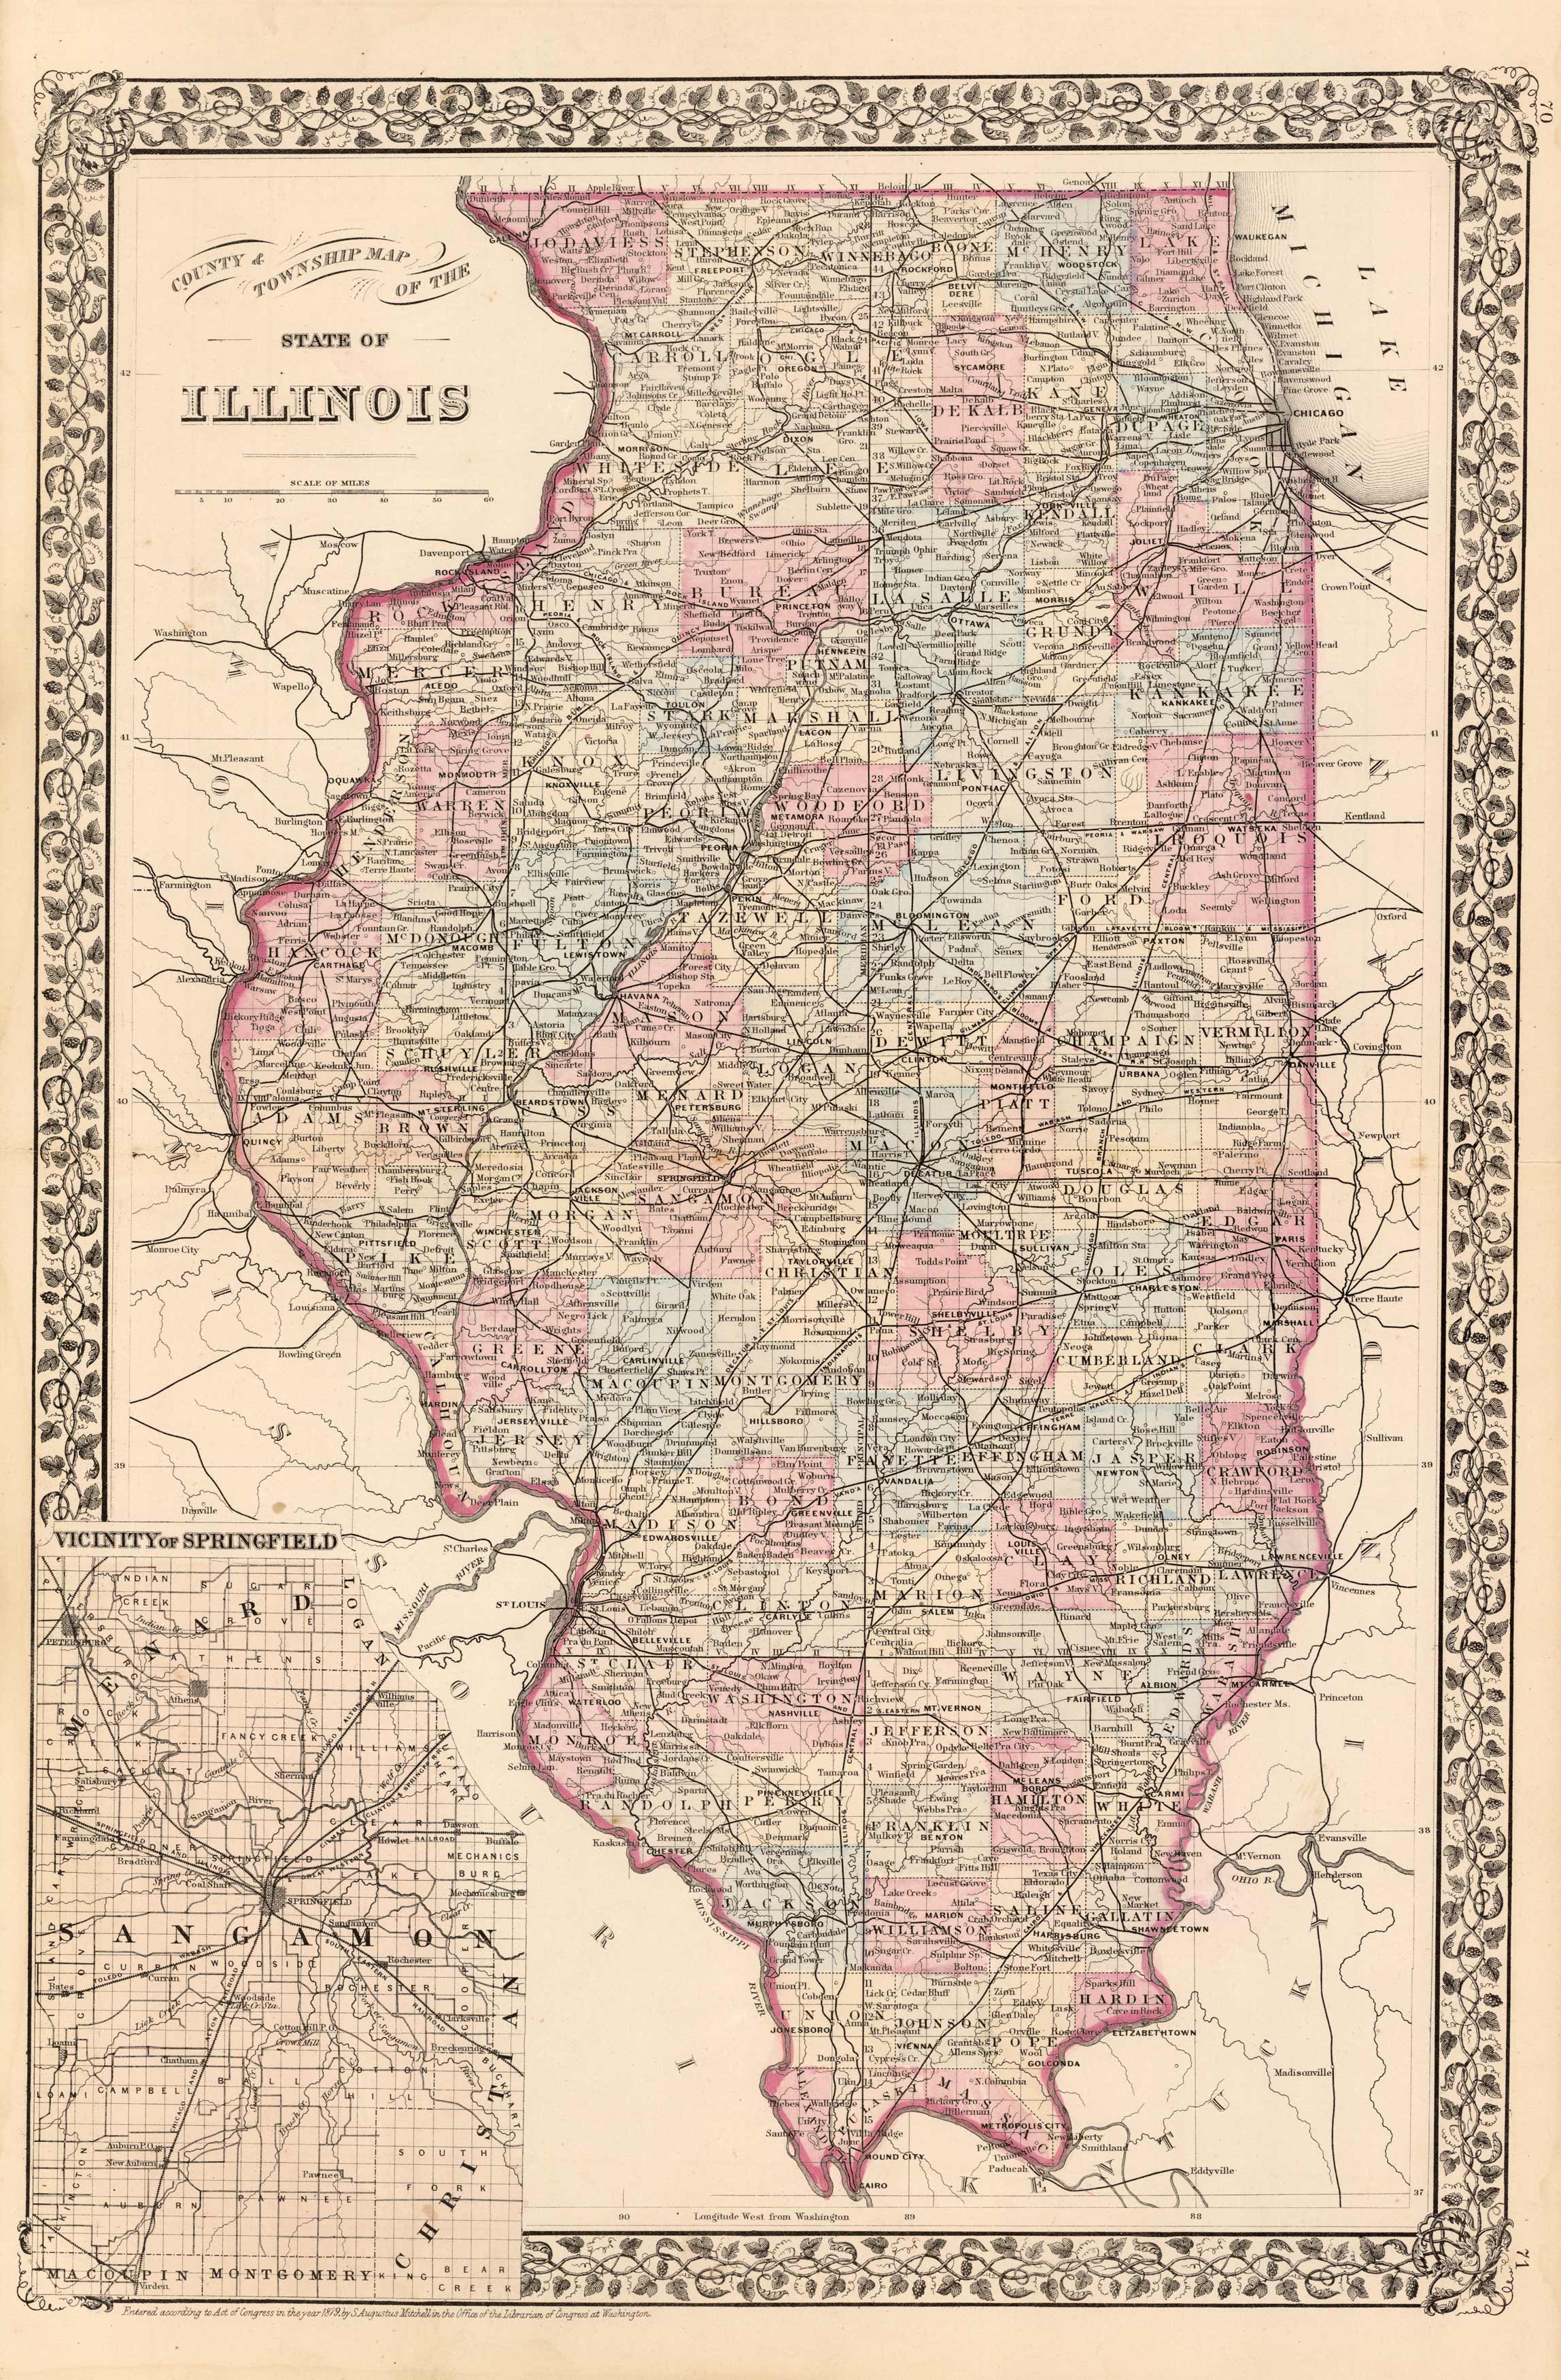 illinois-county-map-printable